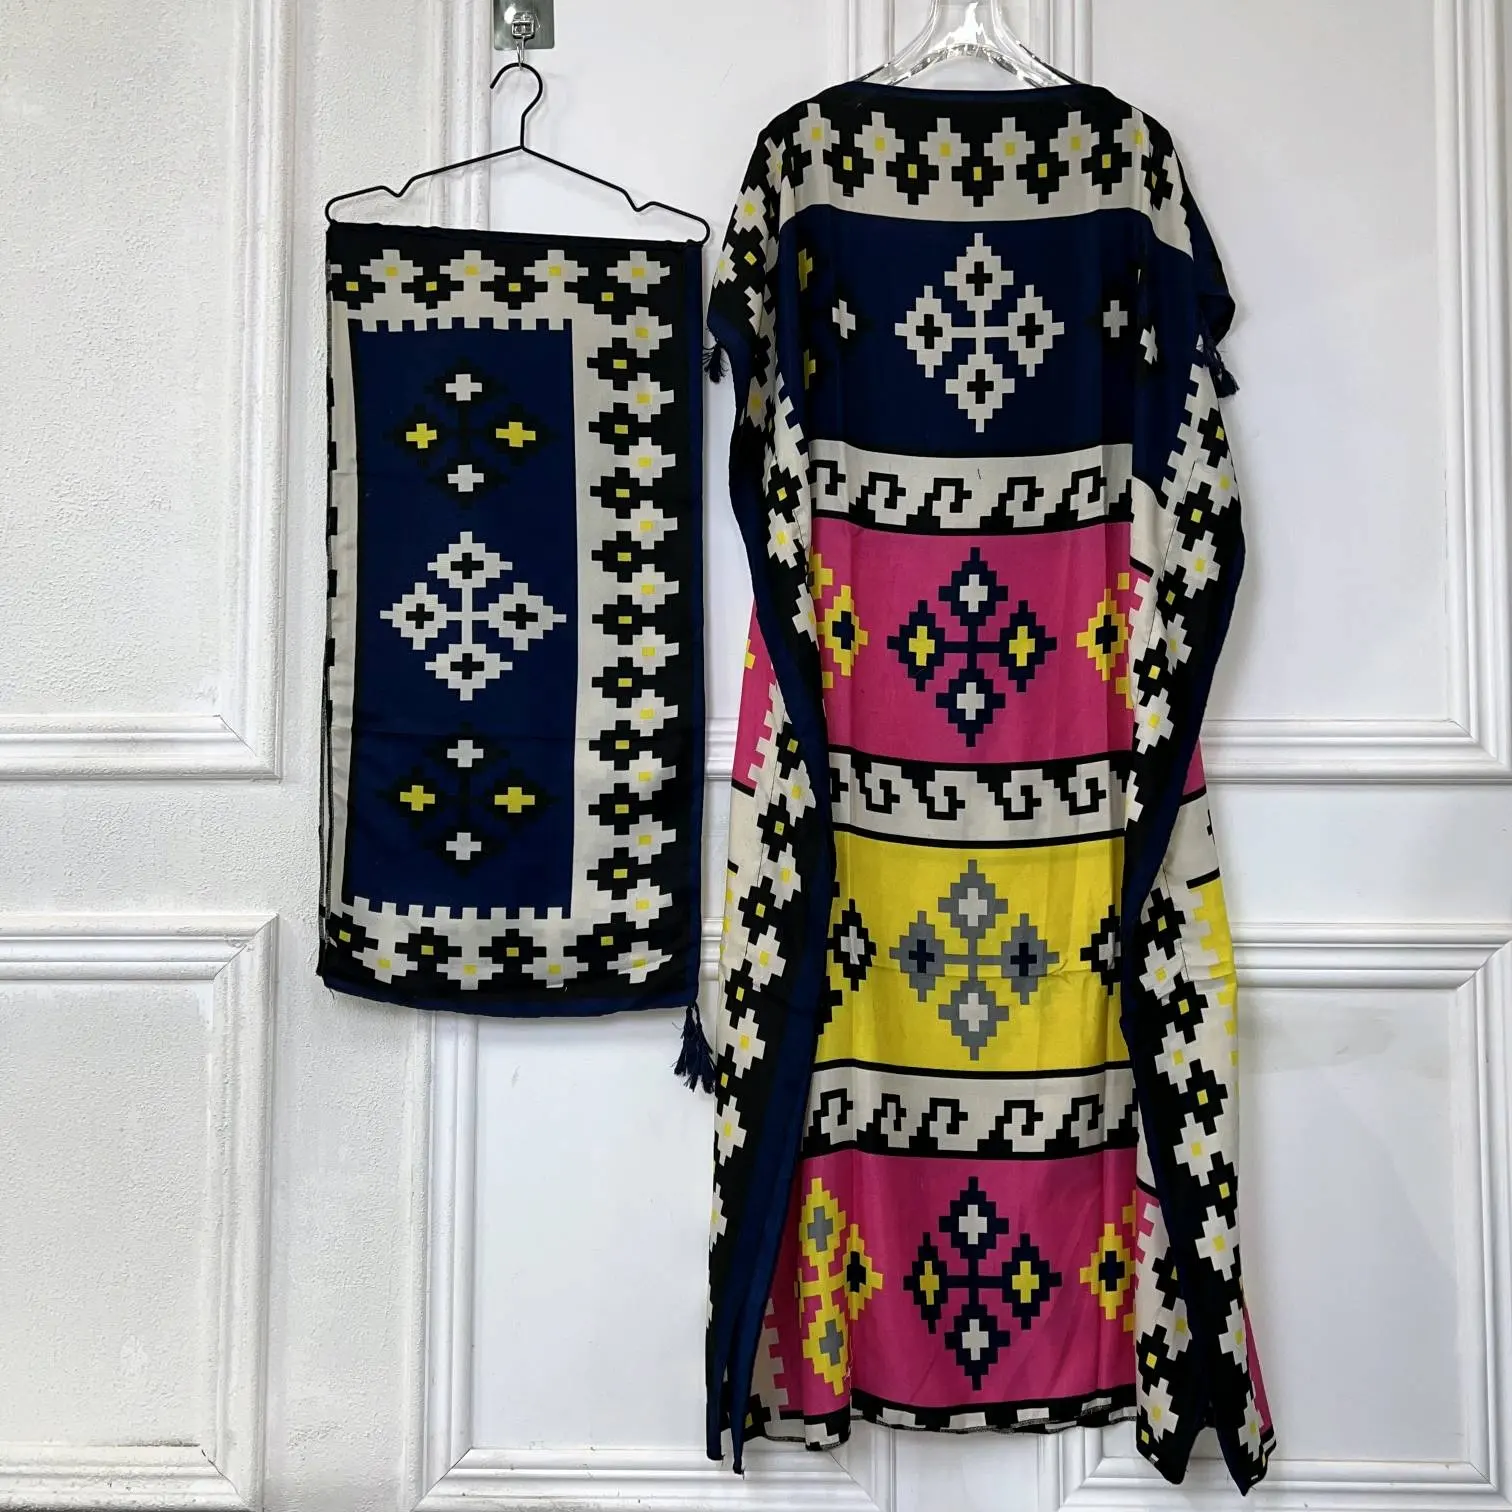 WINYI boho 인쇄 아프리카 비치 드레스 여성용 스카프 두바이 이슬람 다시키 카프탄 아프리카 의류 휴가 보헤미아 저녁